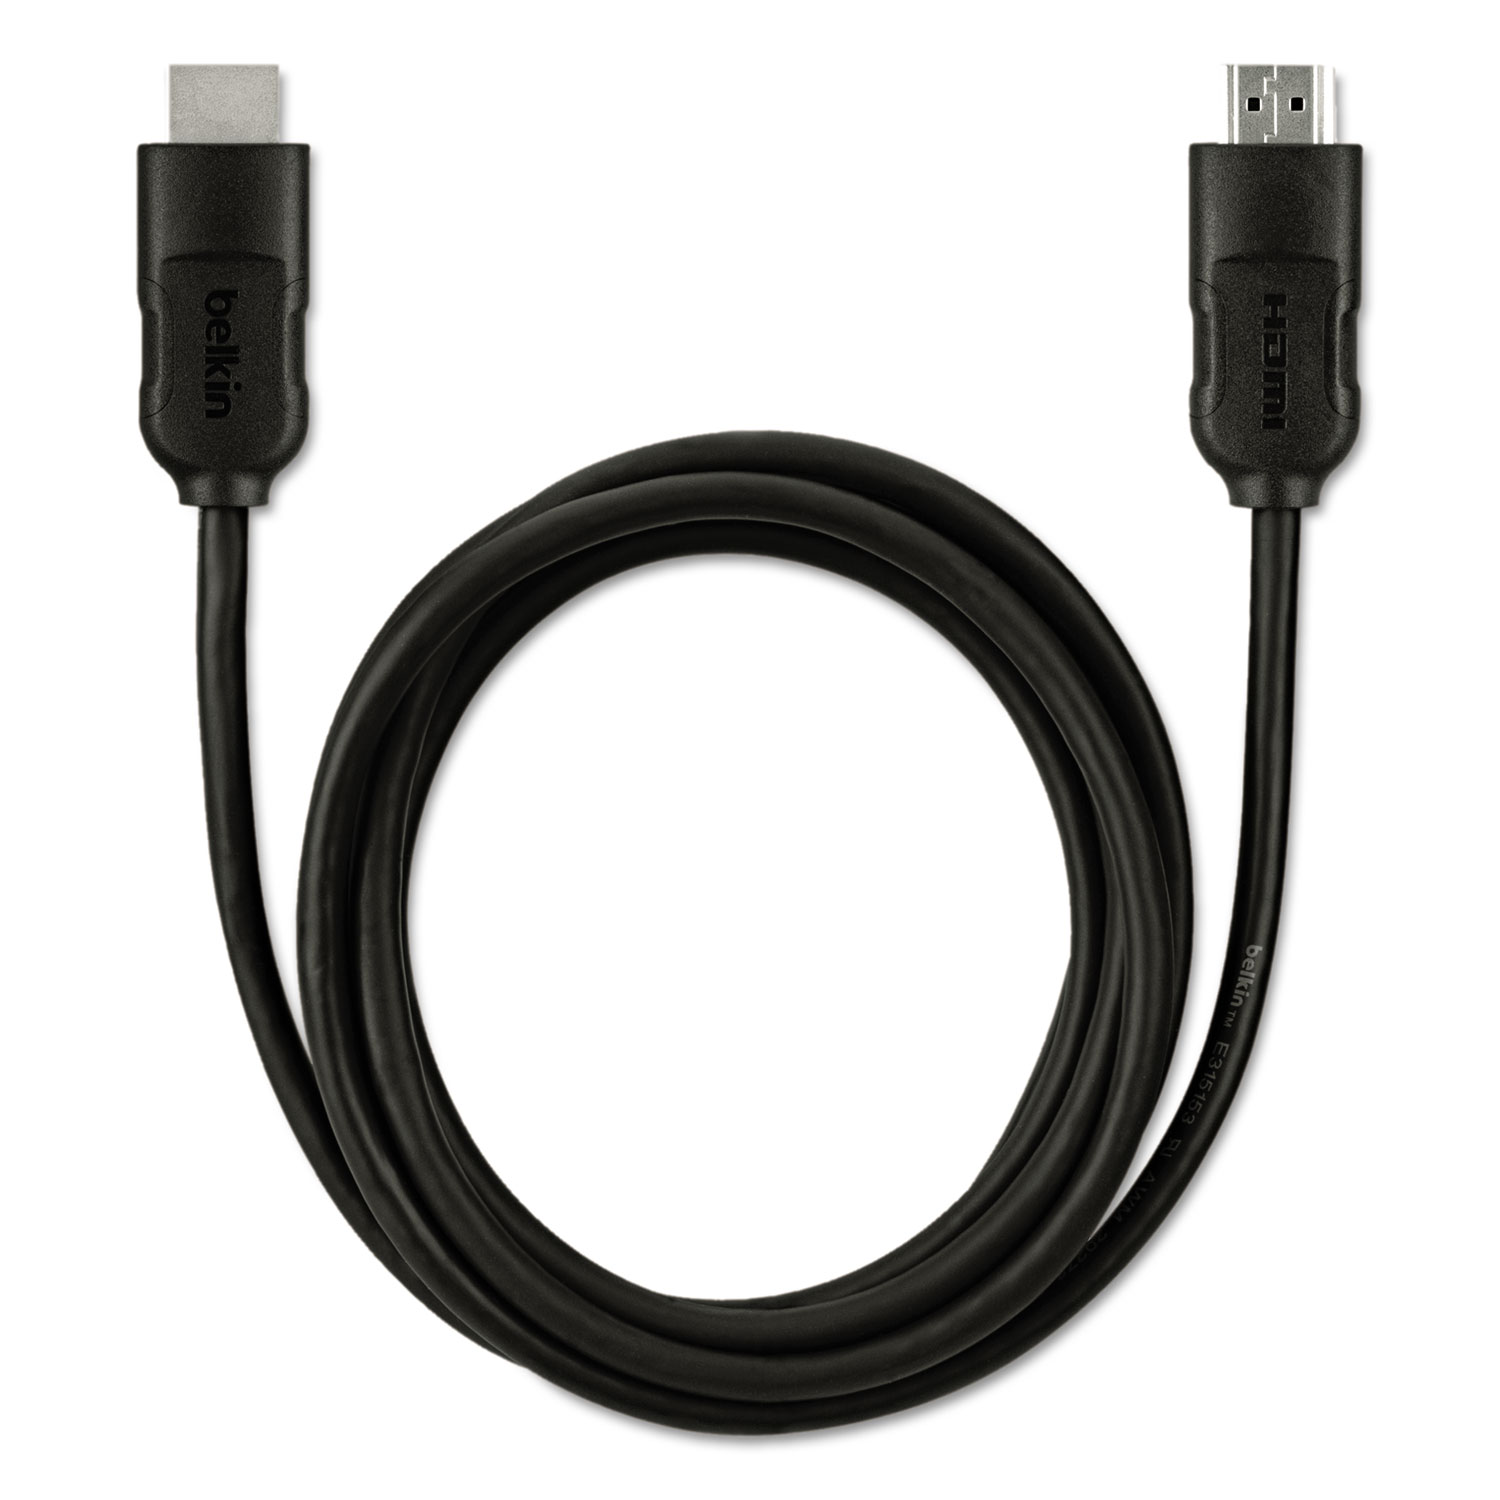  Belkin F8V3311B12 HDMI to HDMI Audio/Video Cable, 12 ft., Black (BLKF8V3311B12) 